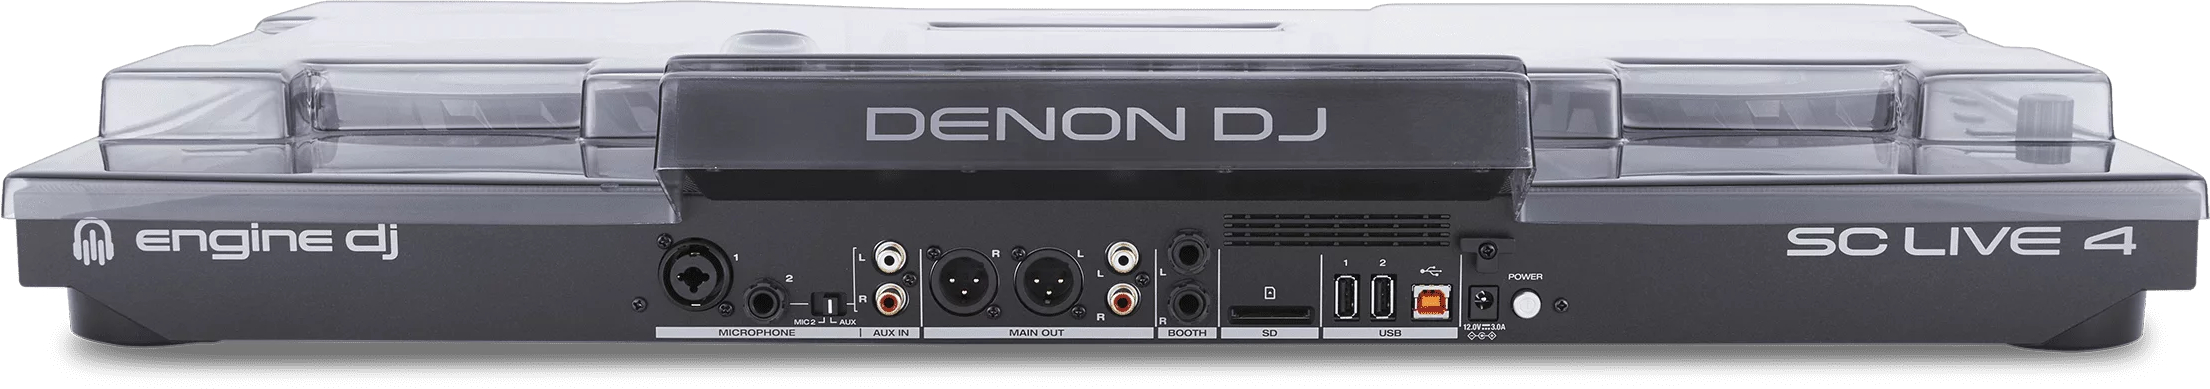 Decksaver Denon Dj Sc Live 4 Cover - Funda DJ - Variation 2